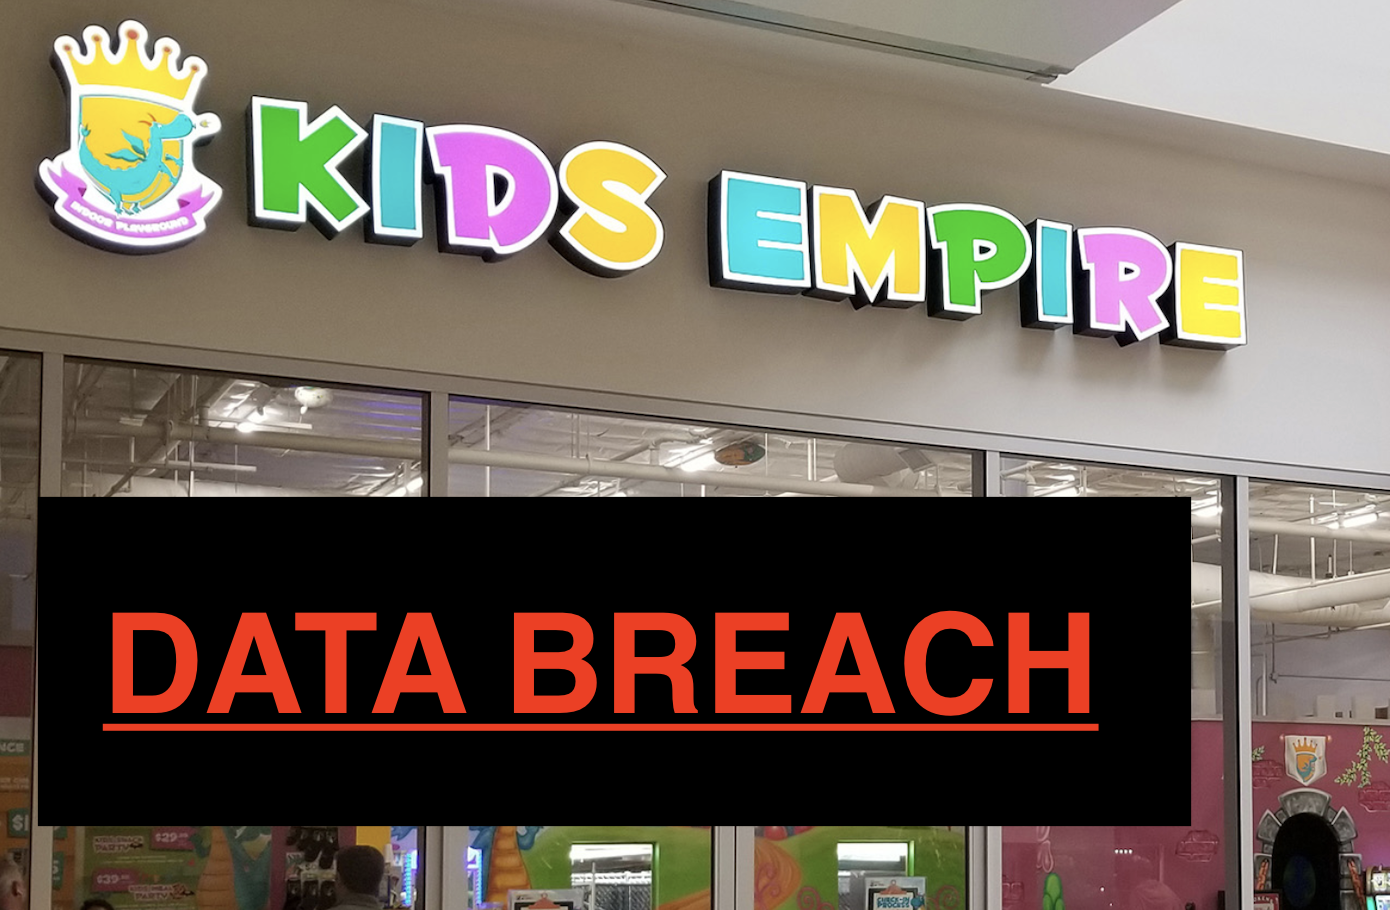 Data Breach at Kids Empire